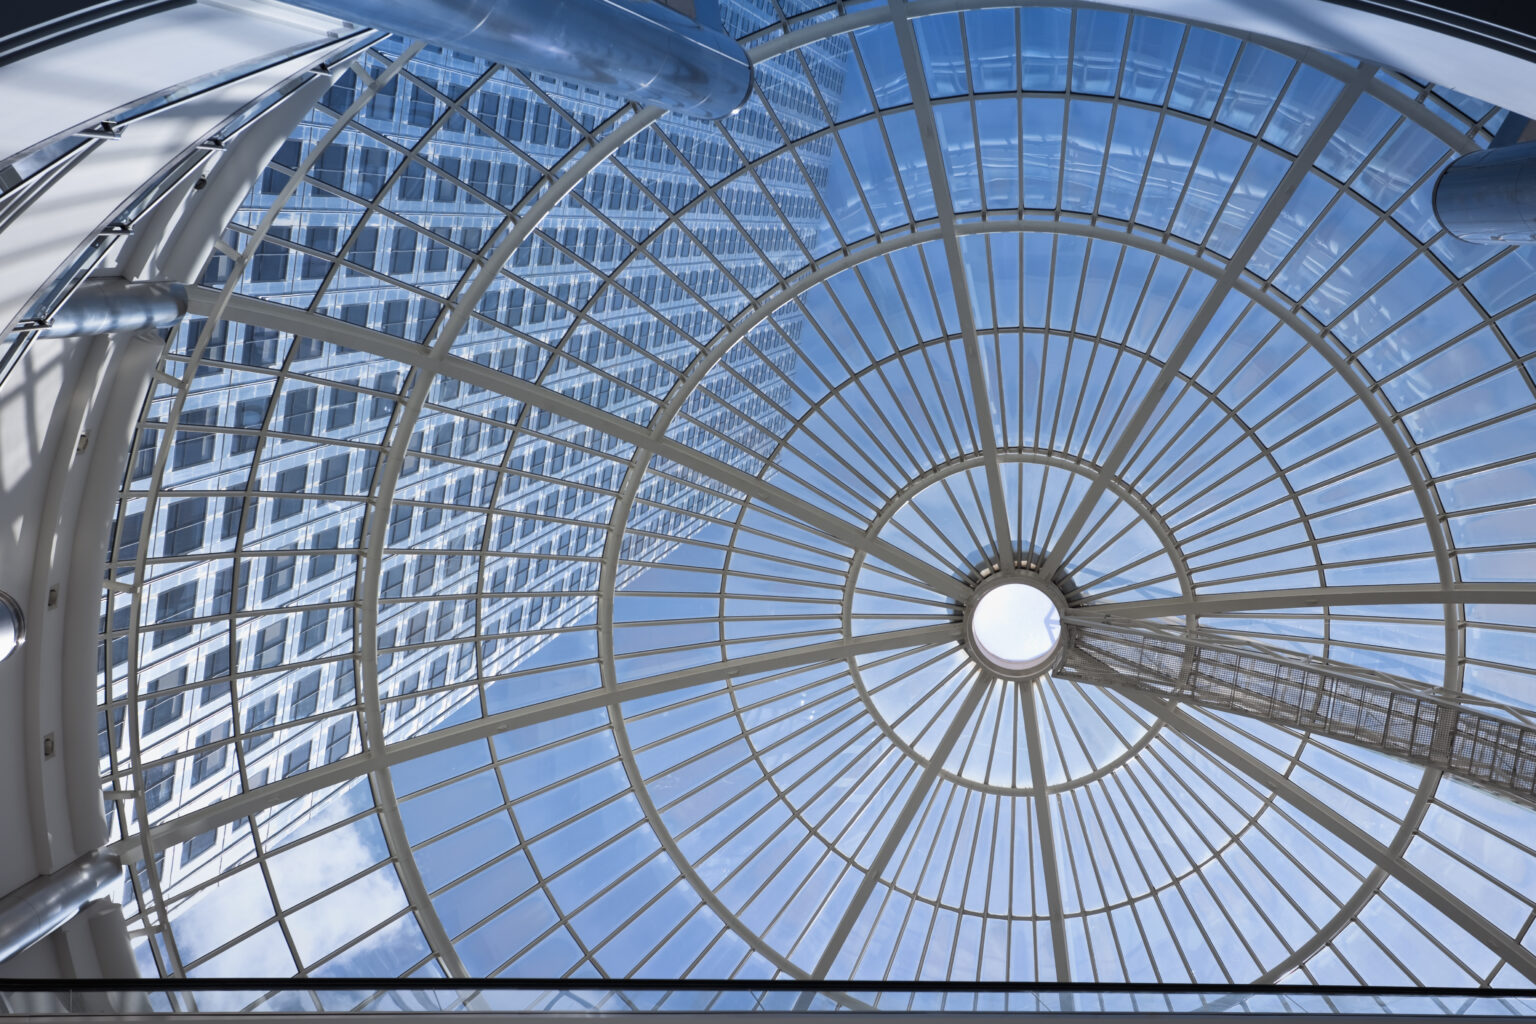 Skyward view of a glass atrium dome with circular gridwork.